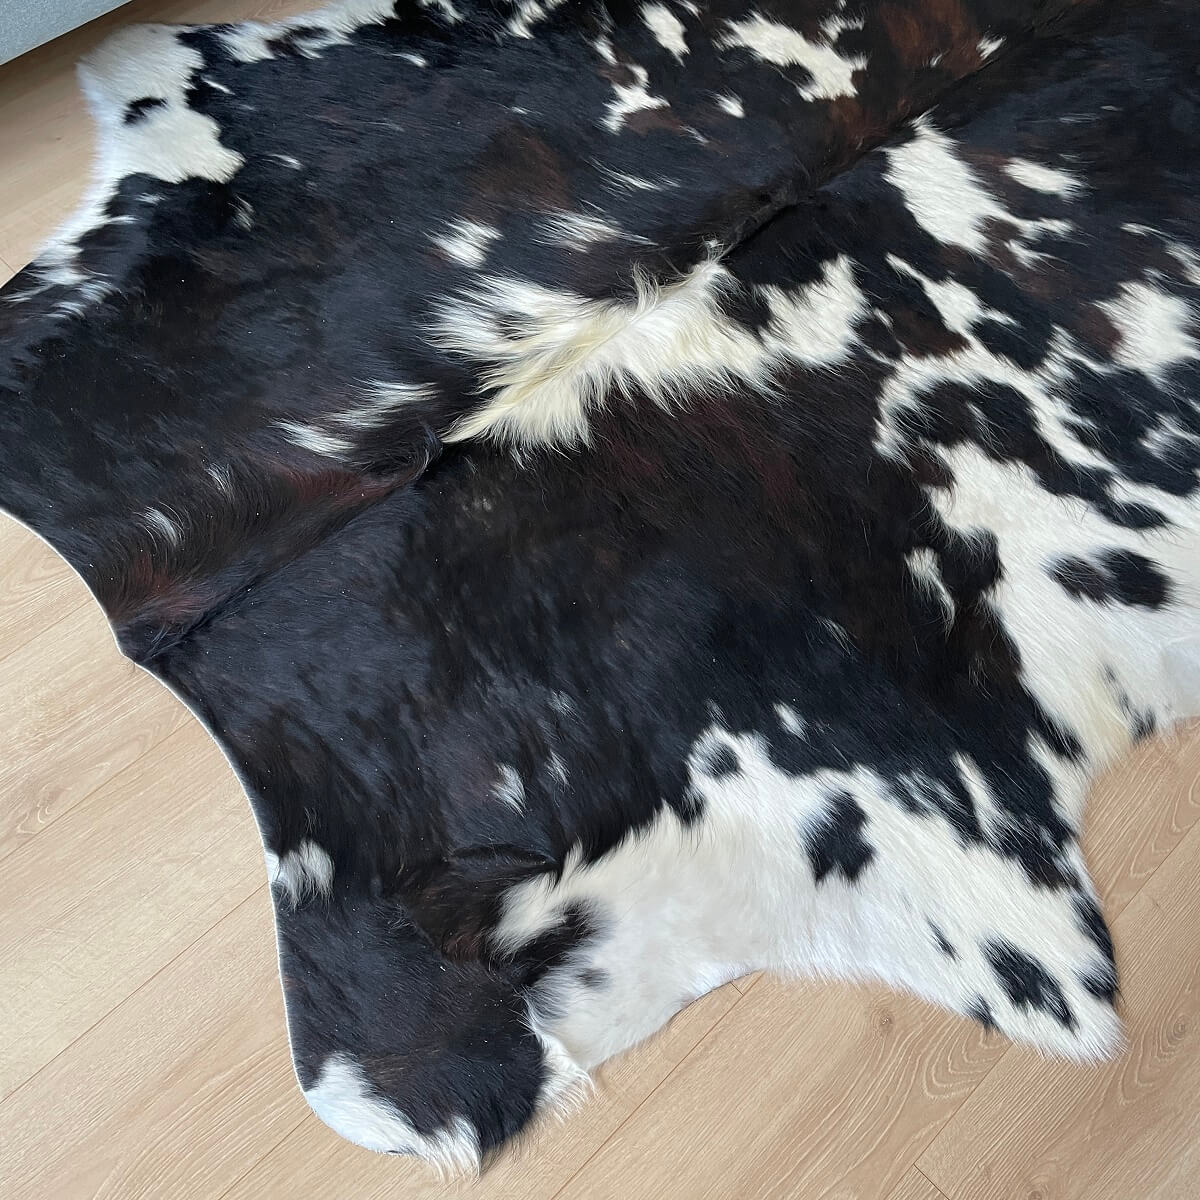 covor din piele de vaca natural tricolor cu pete alb negru si maro contrast cu parchet, mango + bloom